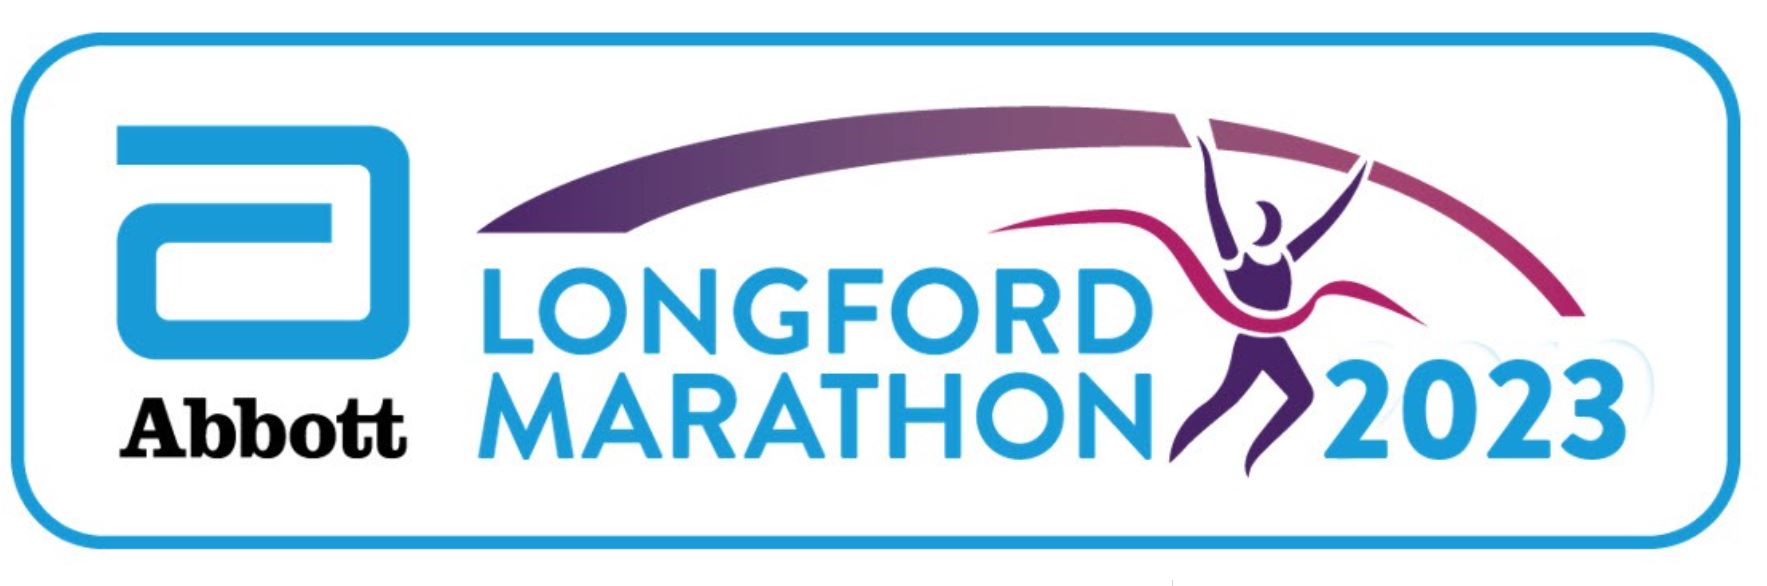 Longford Marathon, Half Marathon & 5K Event